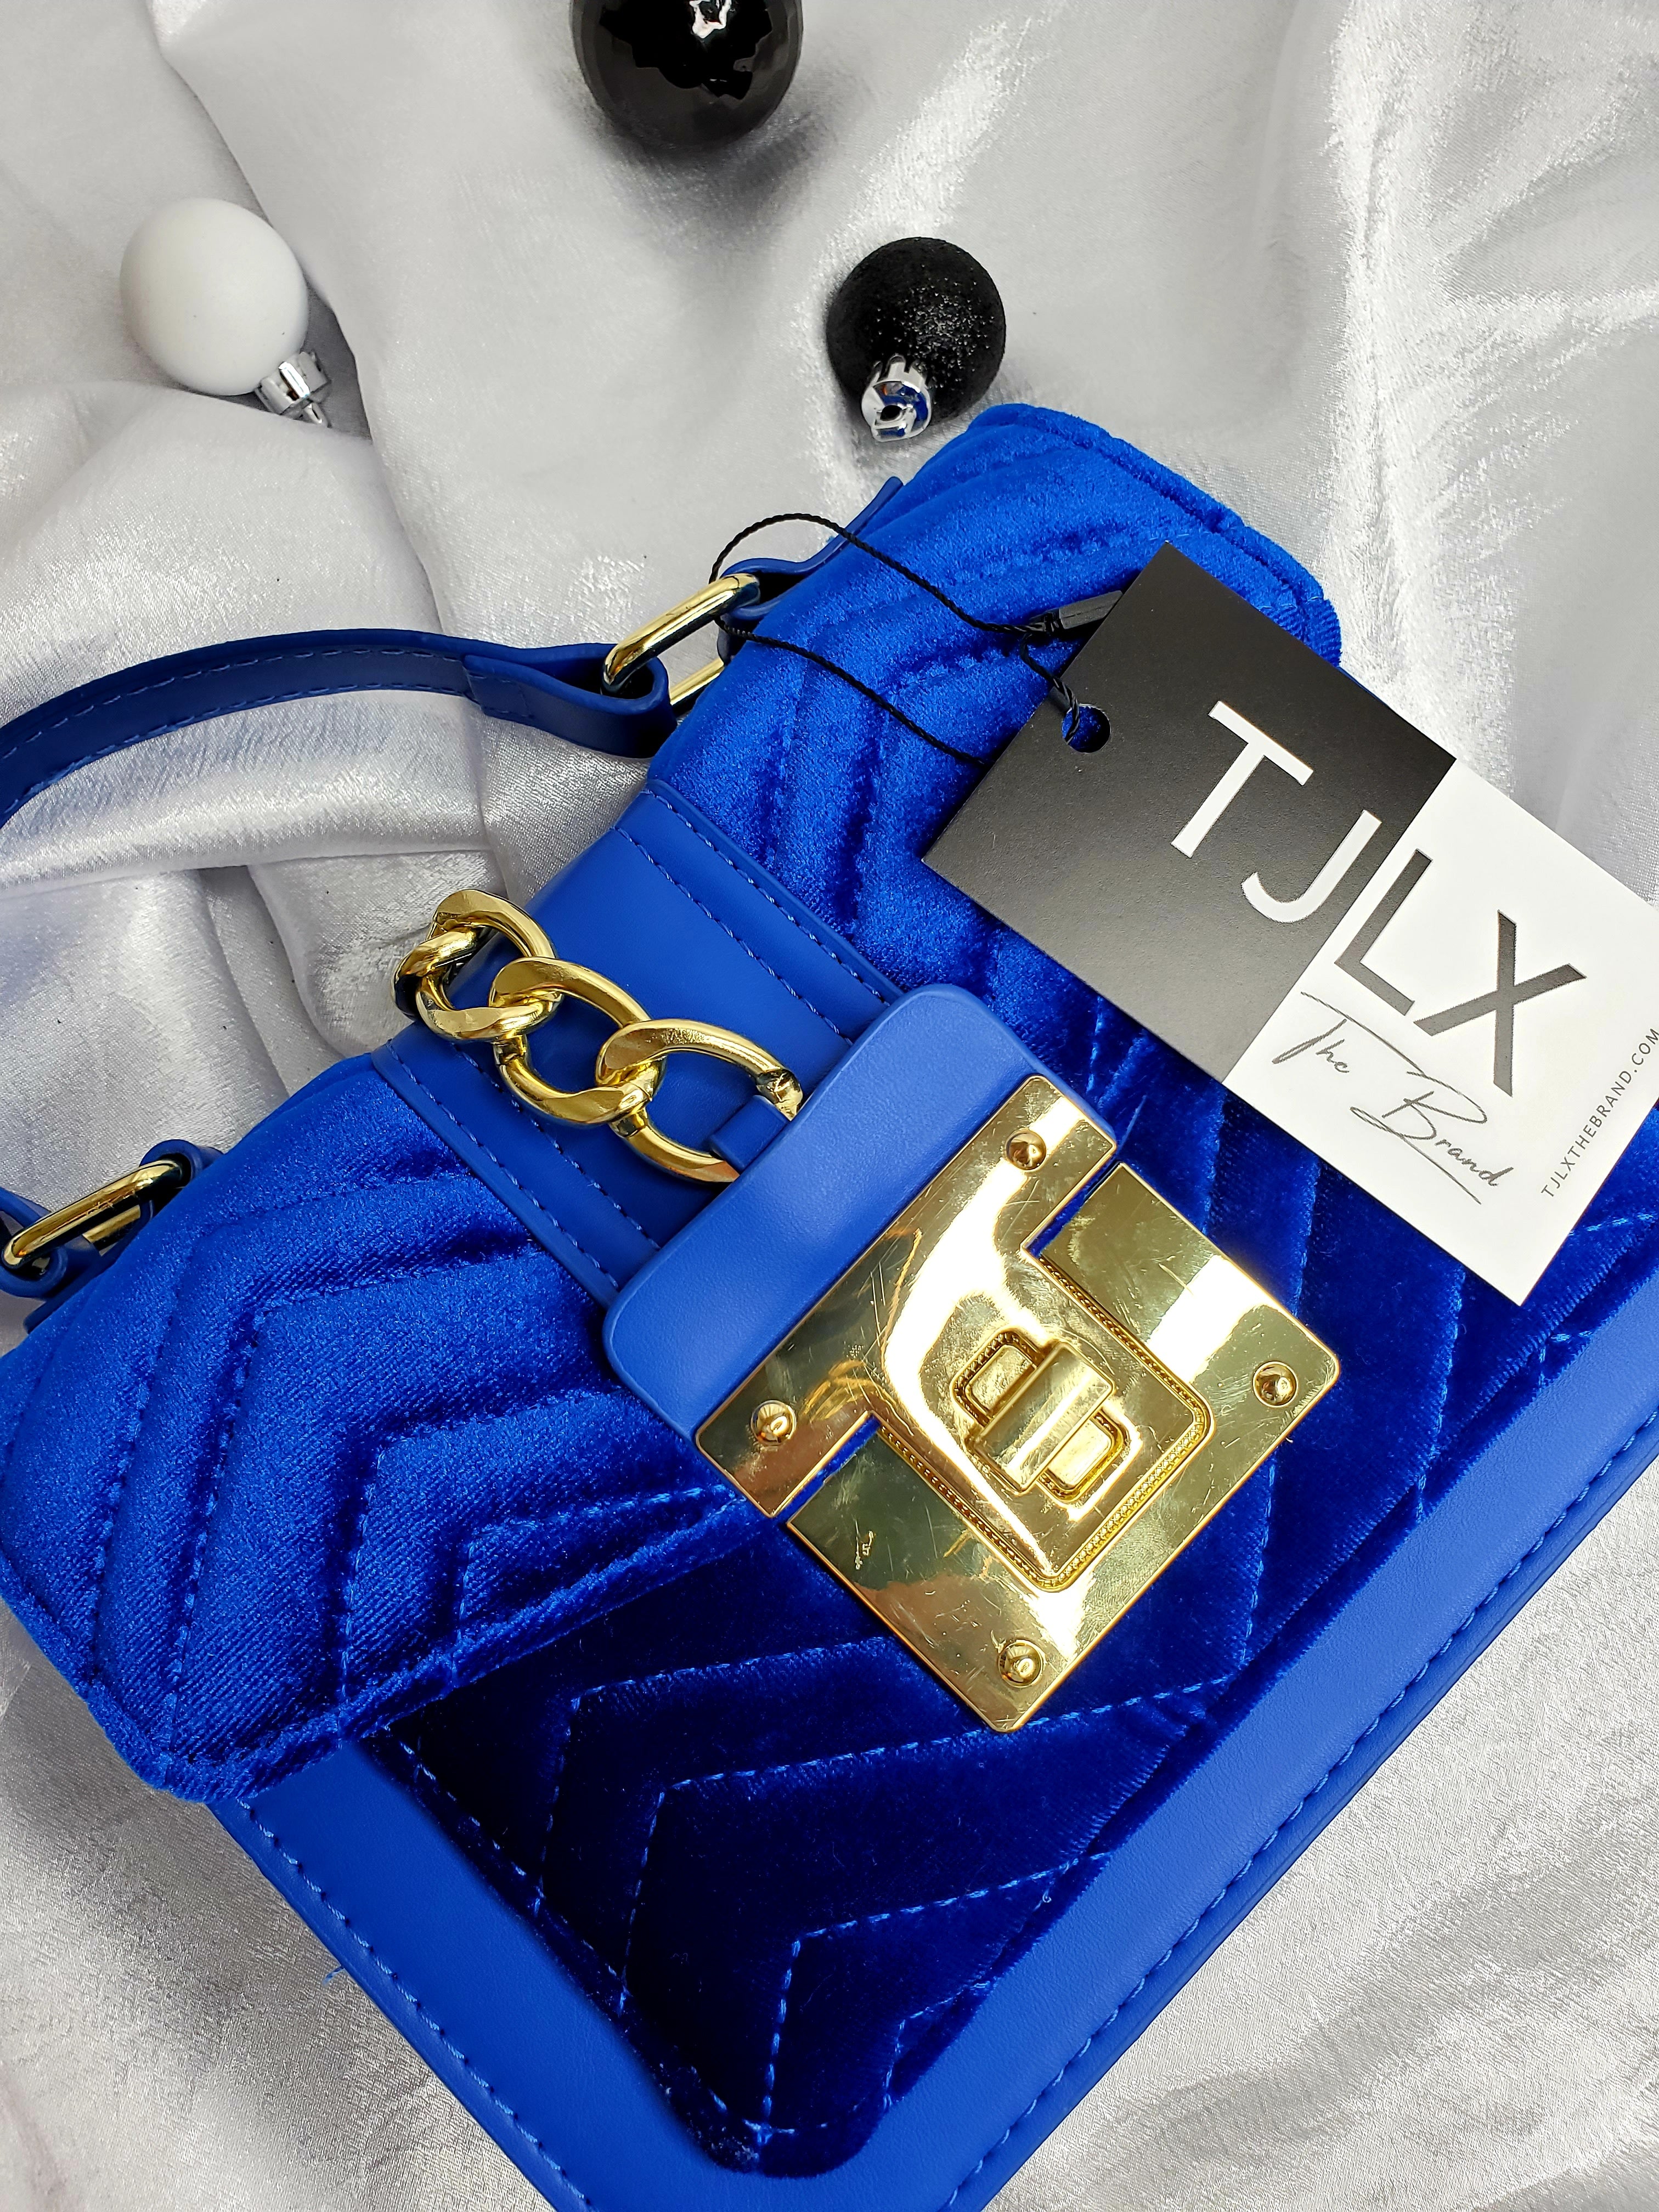 Beautiful handbag suitable for date nights, brunch, shopping, etc  Material: Velvet  Includes adjustable strap  7 colors